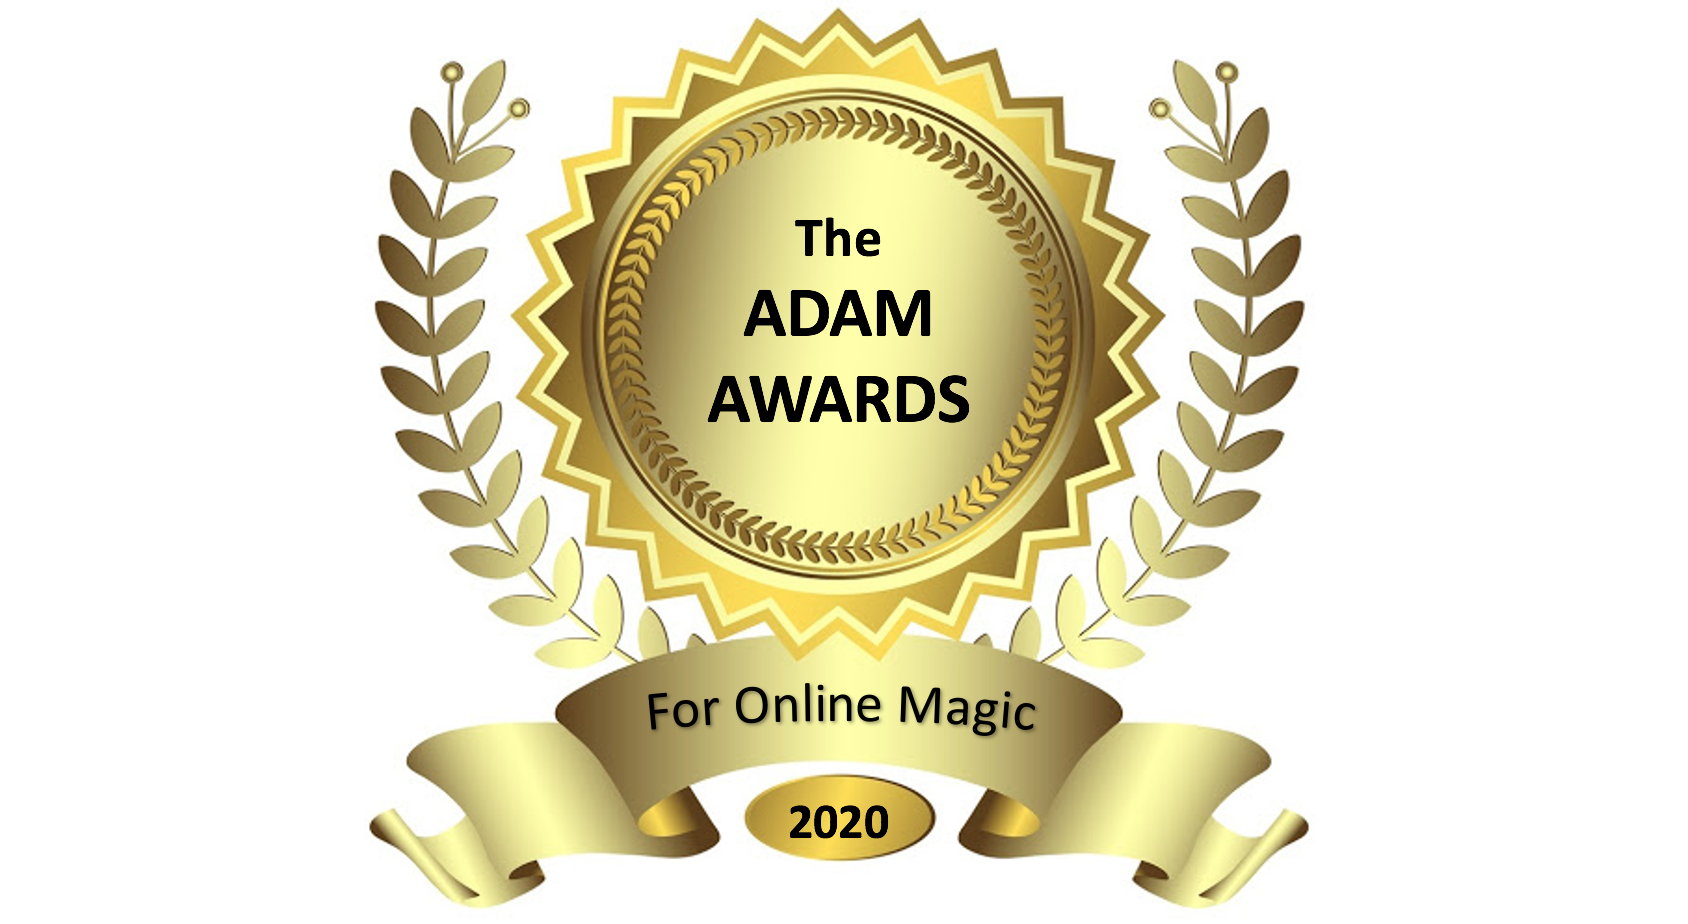 Adam awards